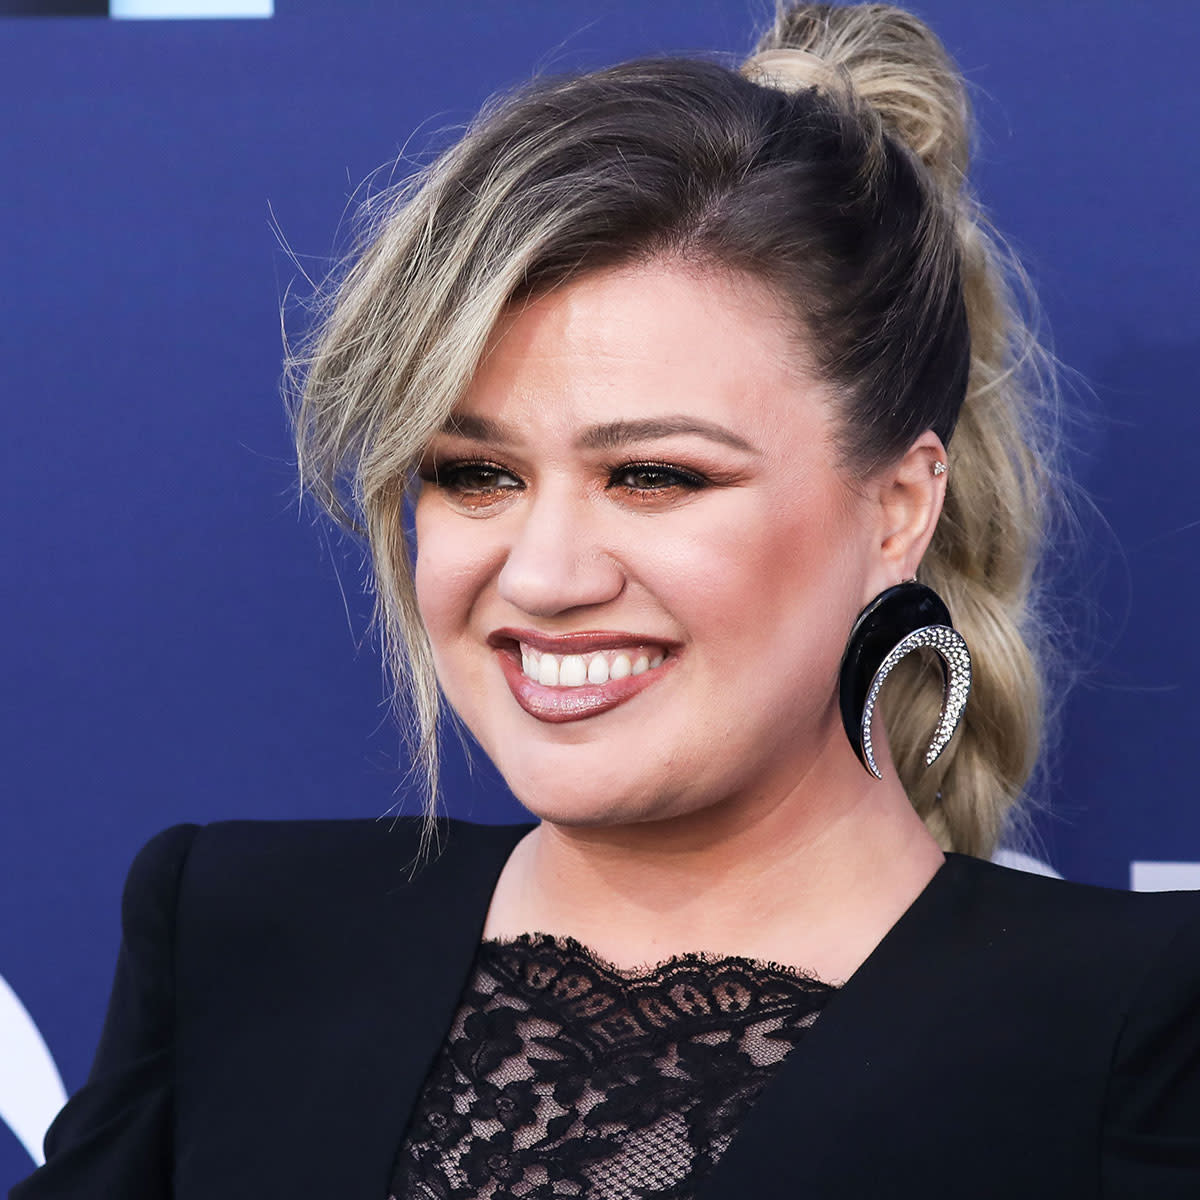 Kelly Clarkson ponytail smiling red carpet